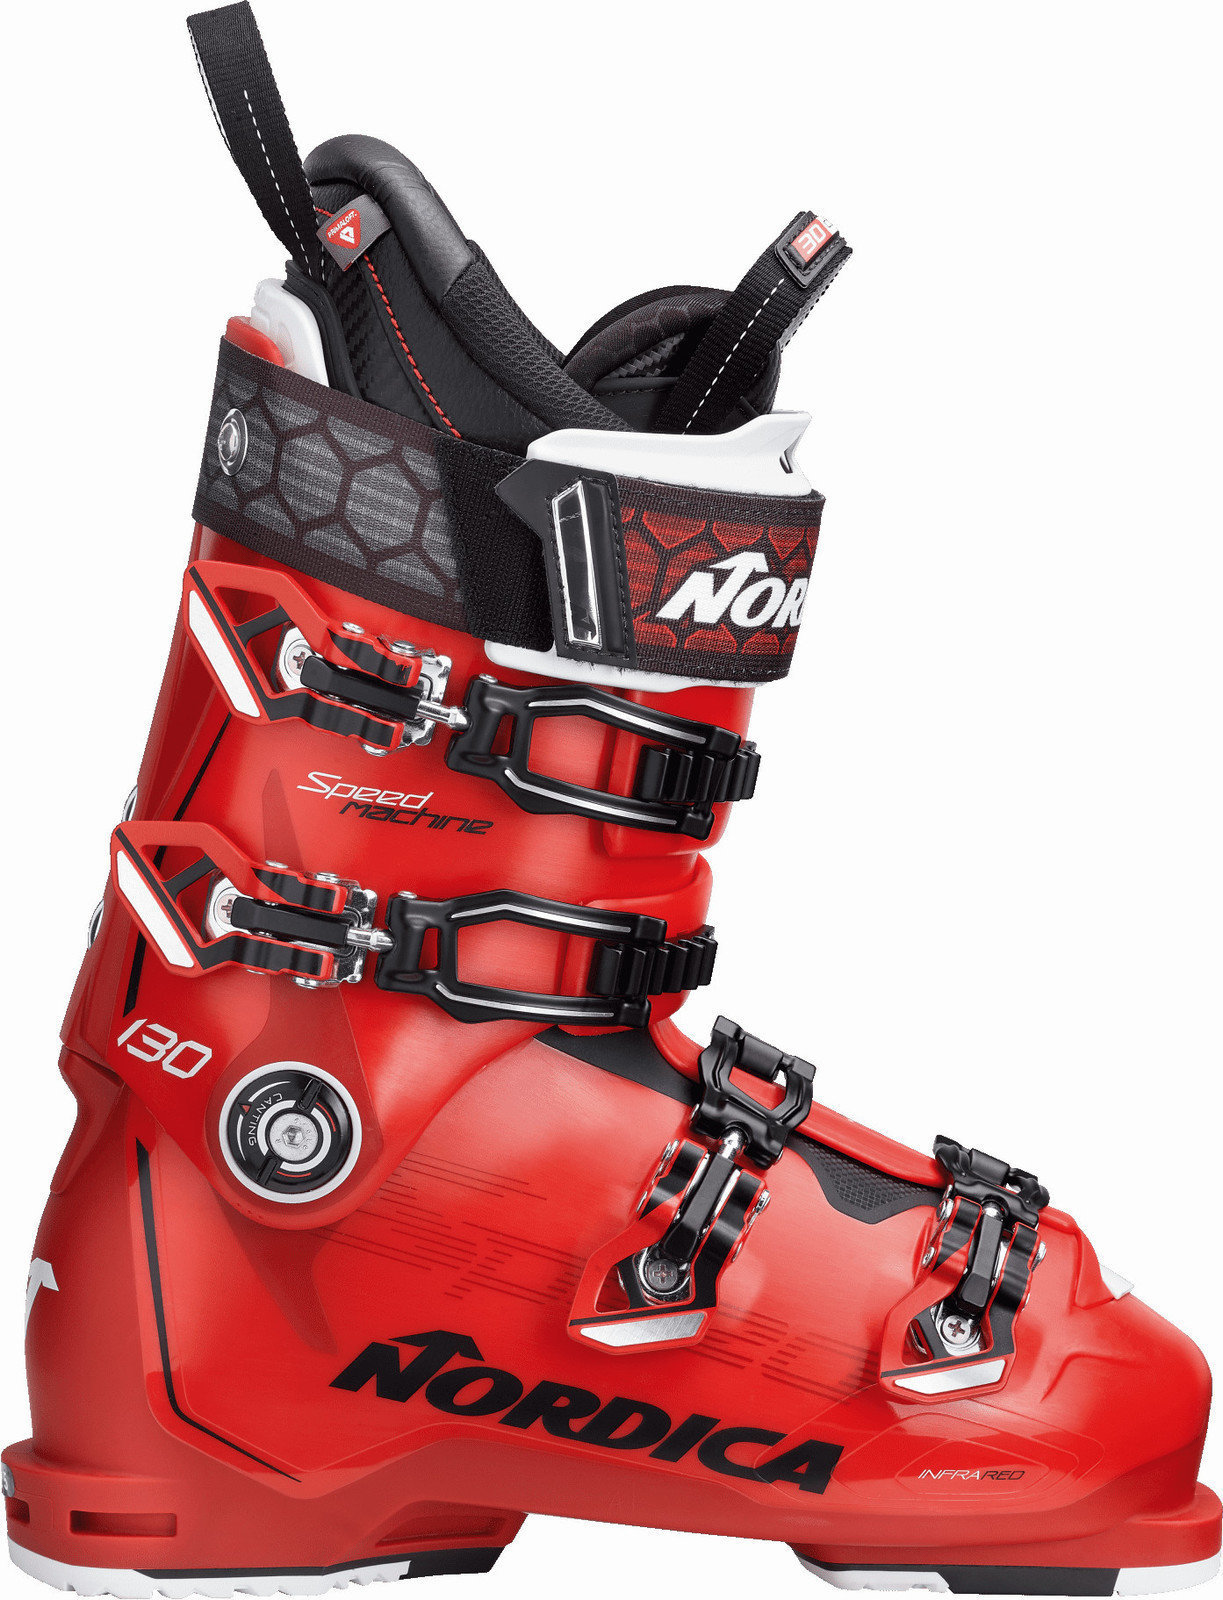 Alpine Ski Boots Nordica Speedmachine 130 Red-Black-White 29 18/19